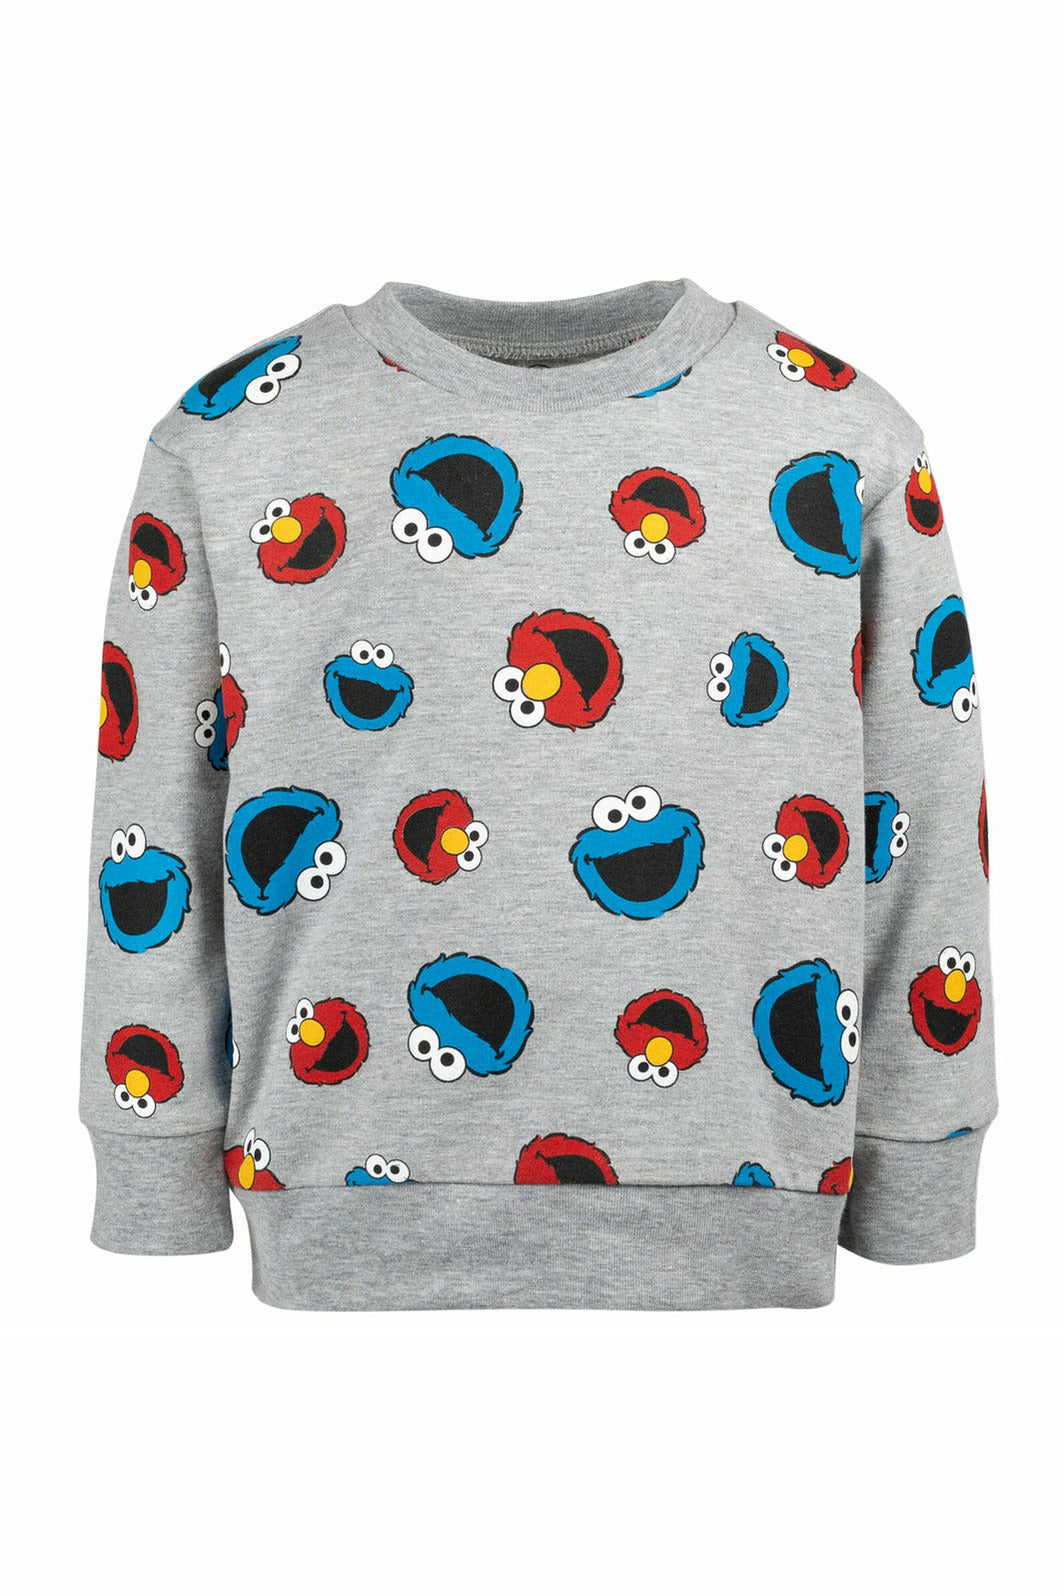 Sesame Street French Terry Raglan Sweatshirt T-Shirt Pants